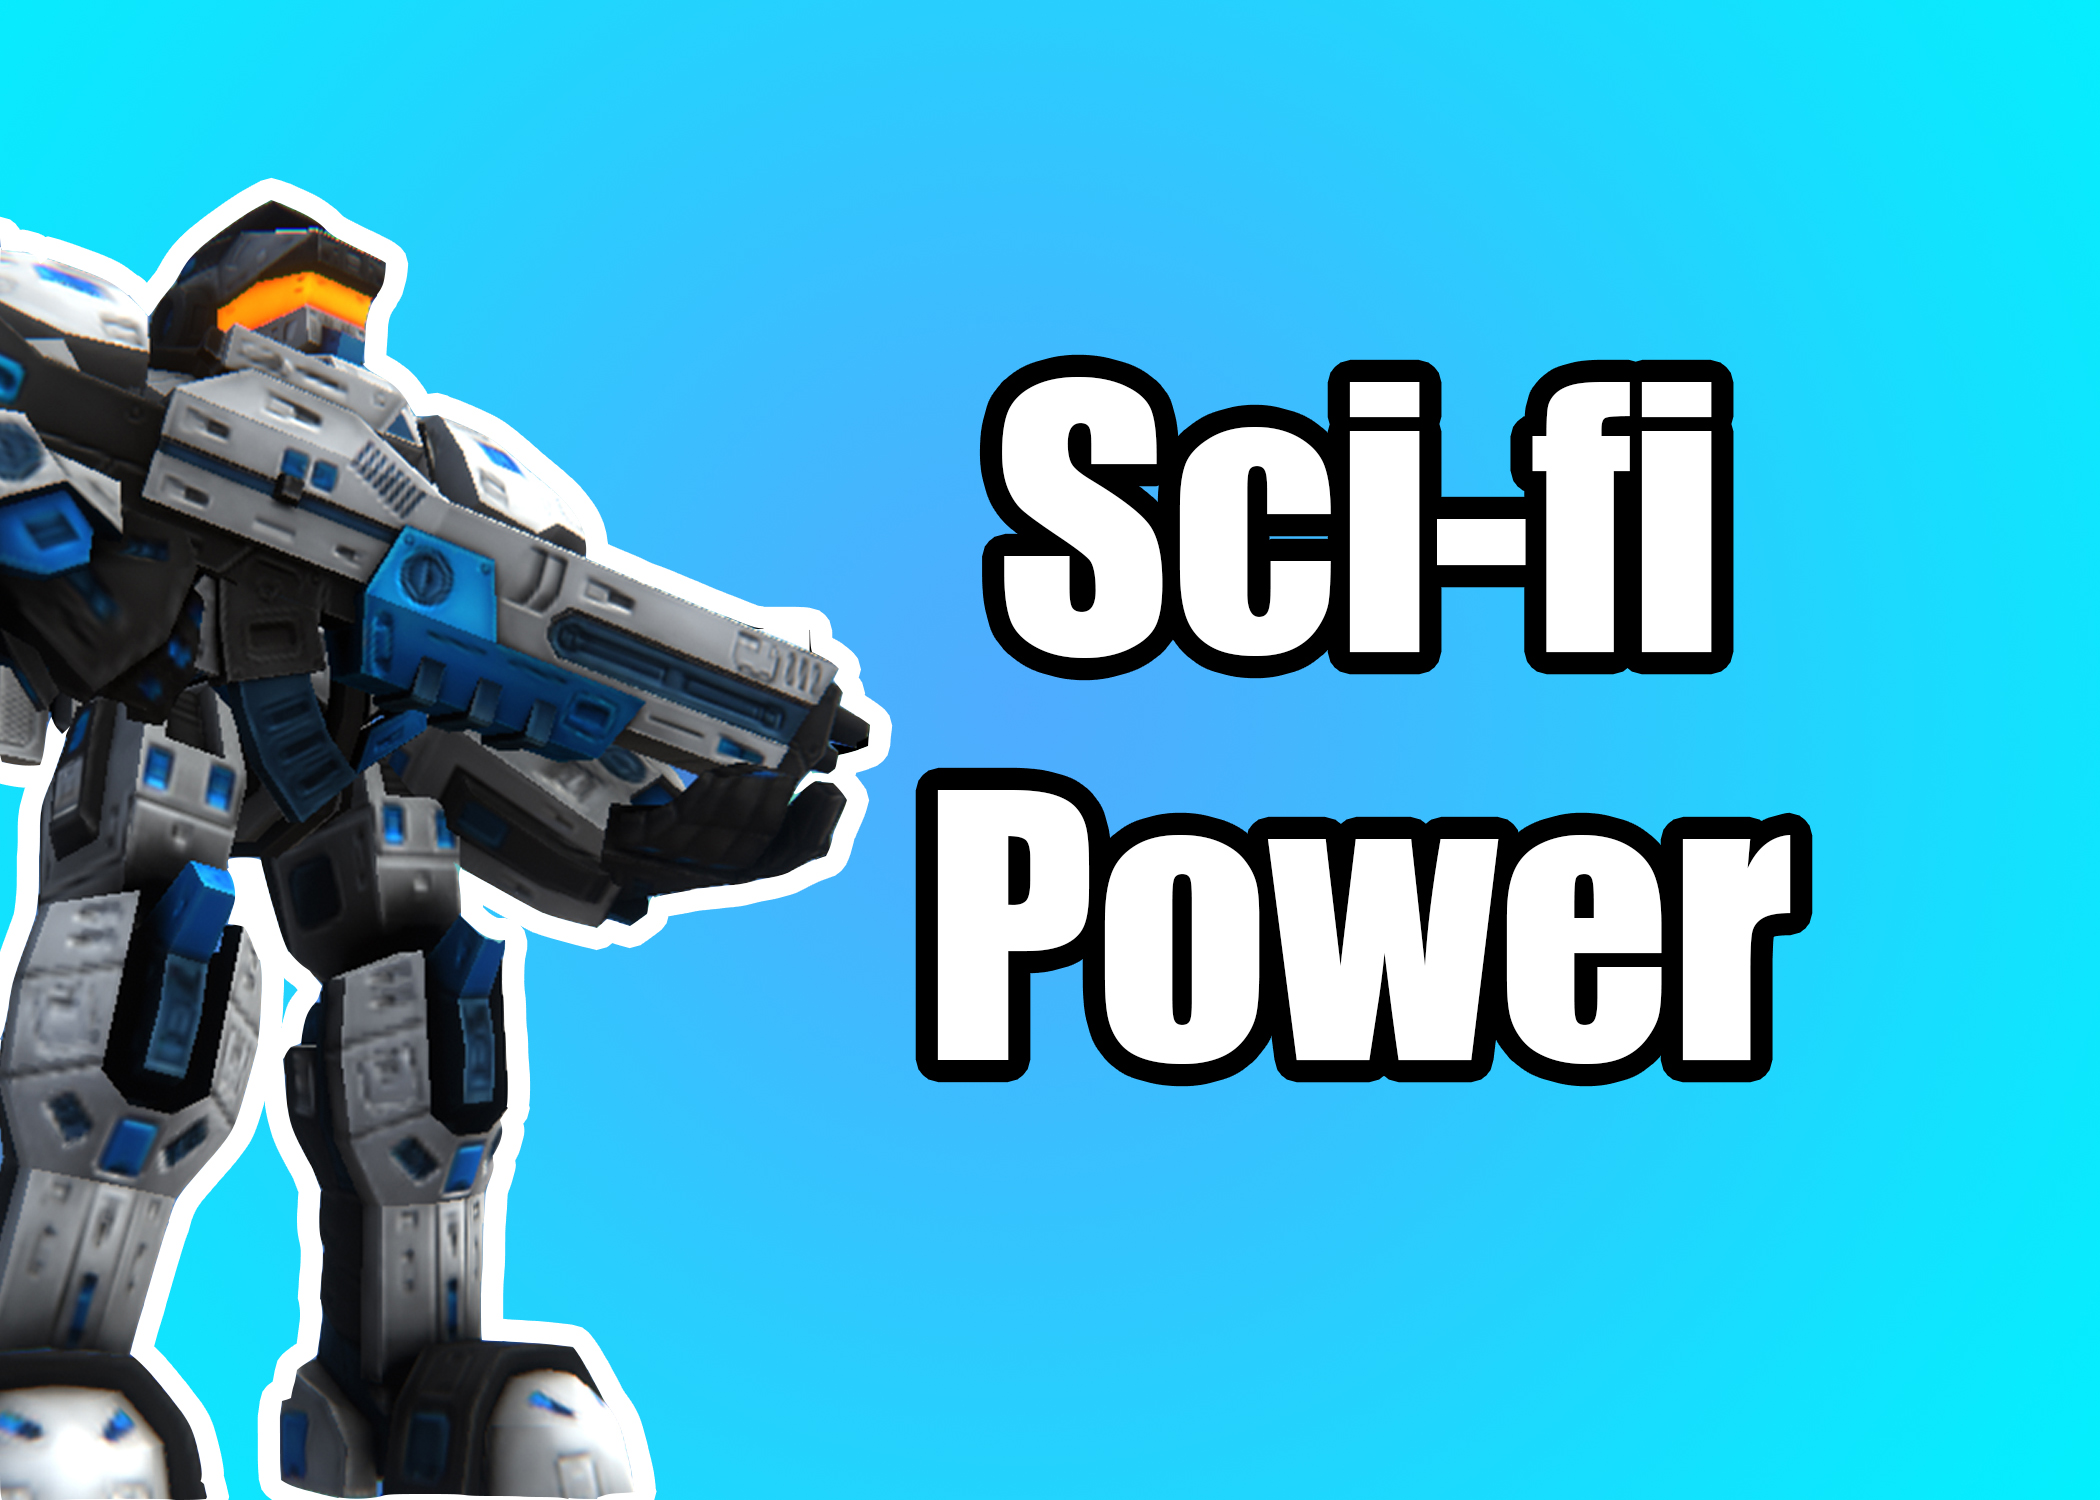 Sci-fi Power